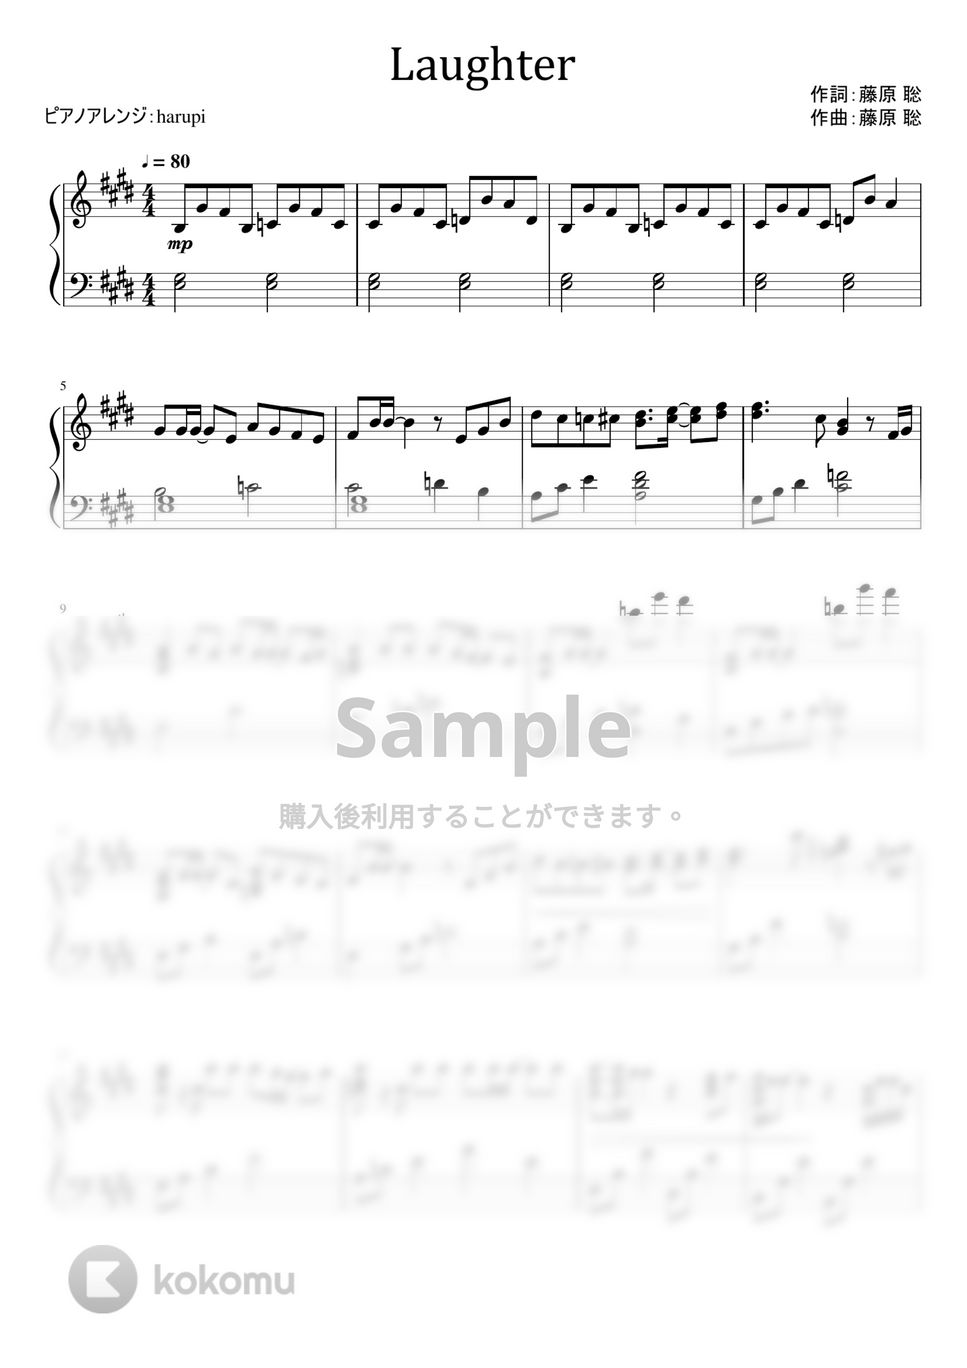 Official髭男dism - Laughter (髭男/ピアノ) by harupi